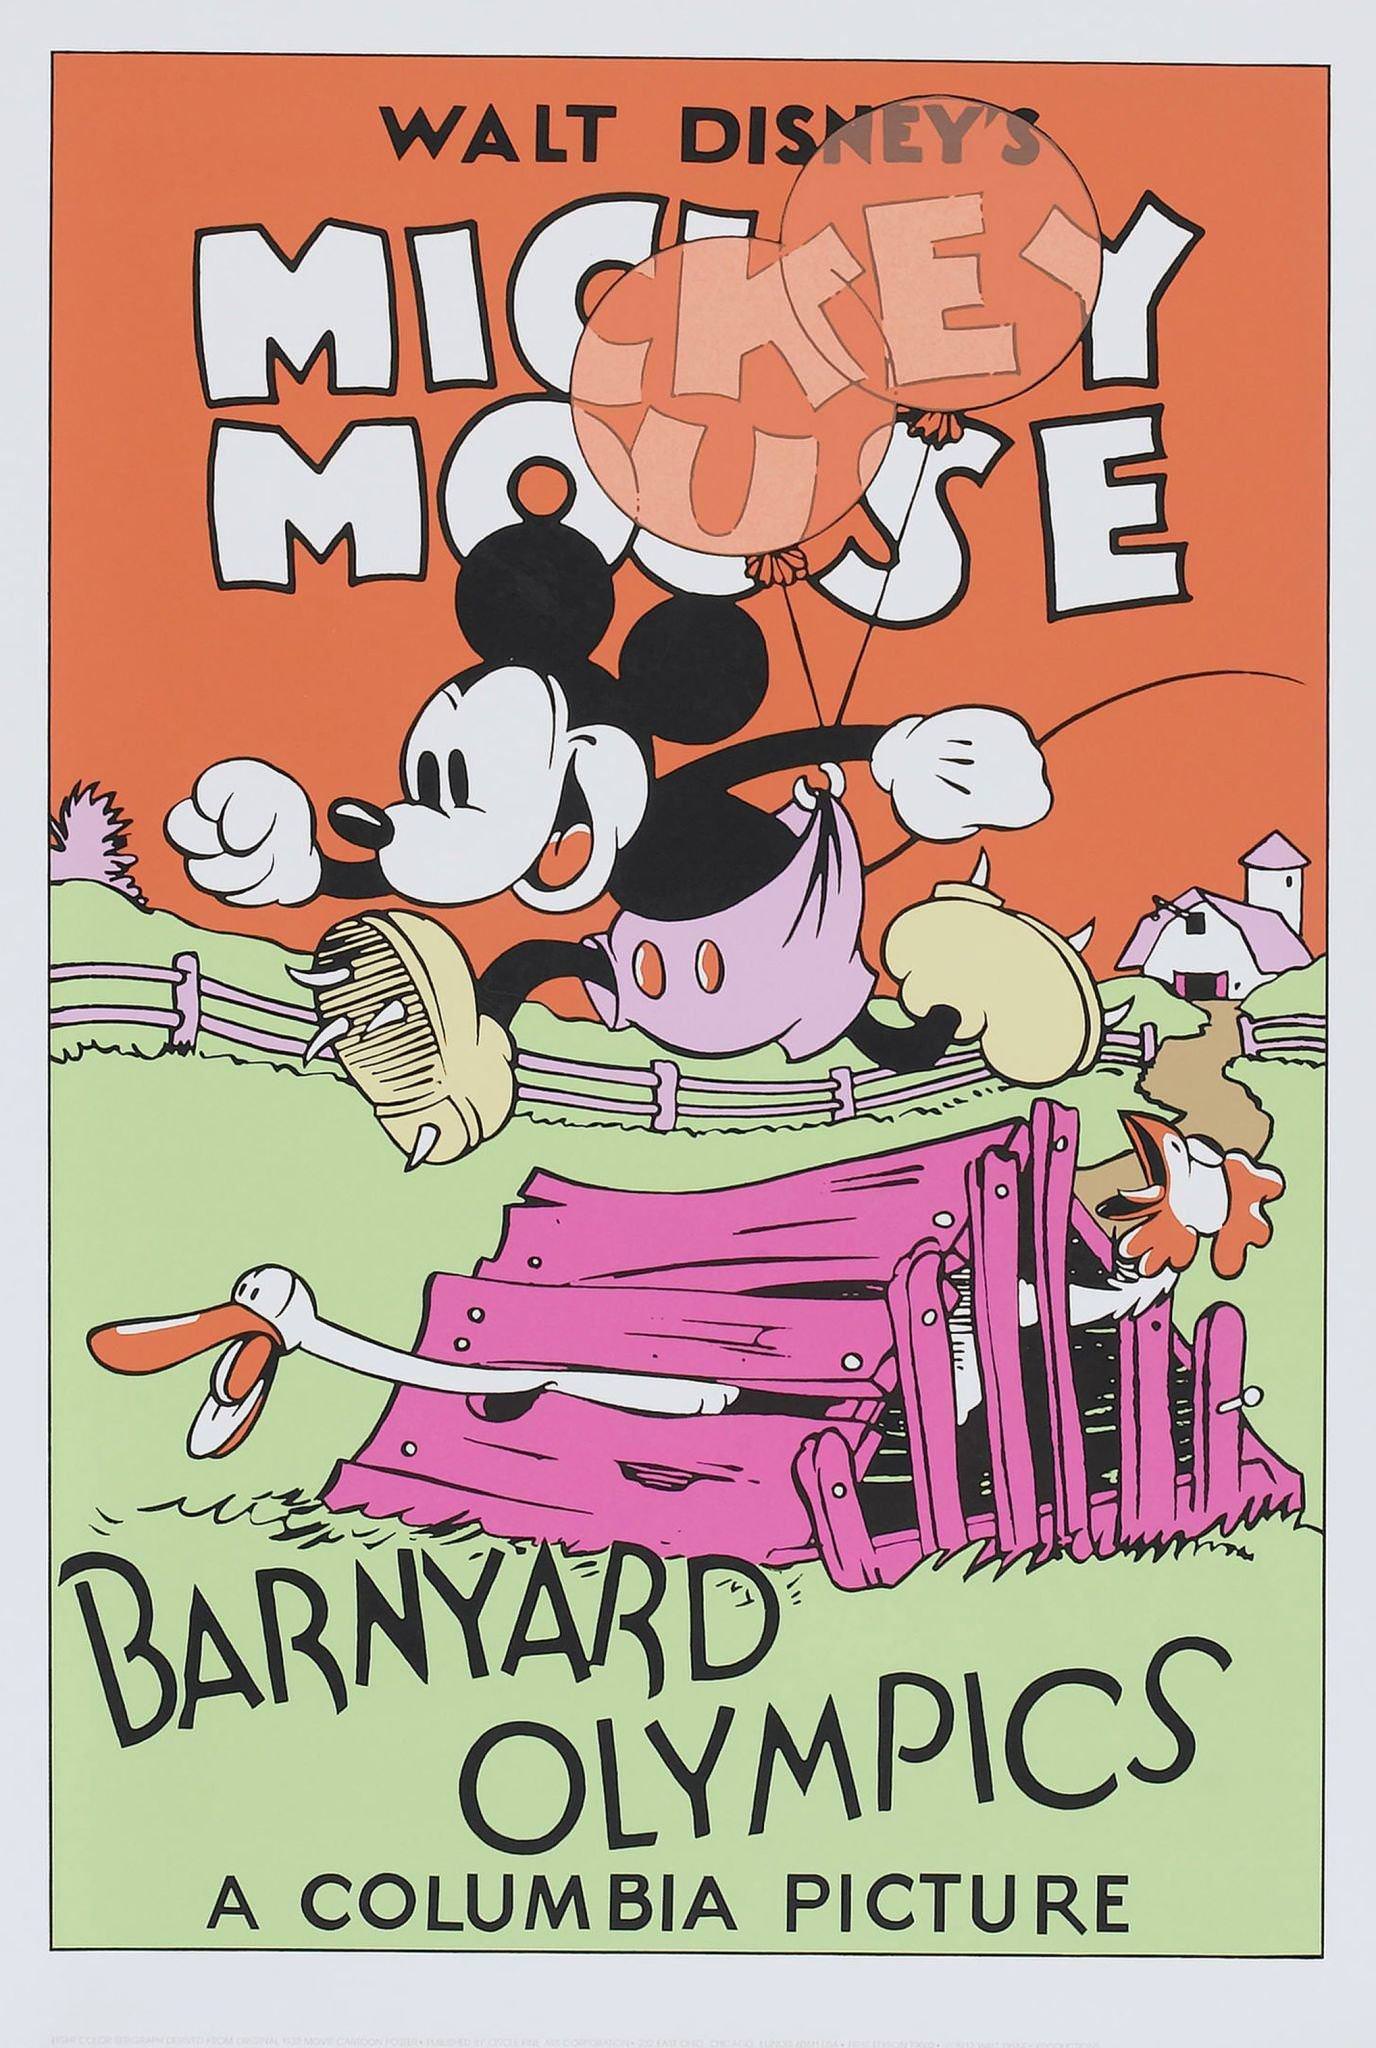 Barnyard Olympics, poster, Mickey Mouse, 1932.